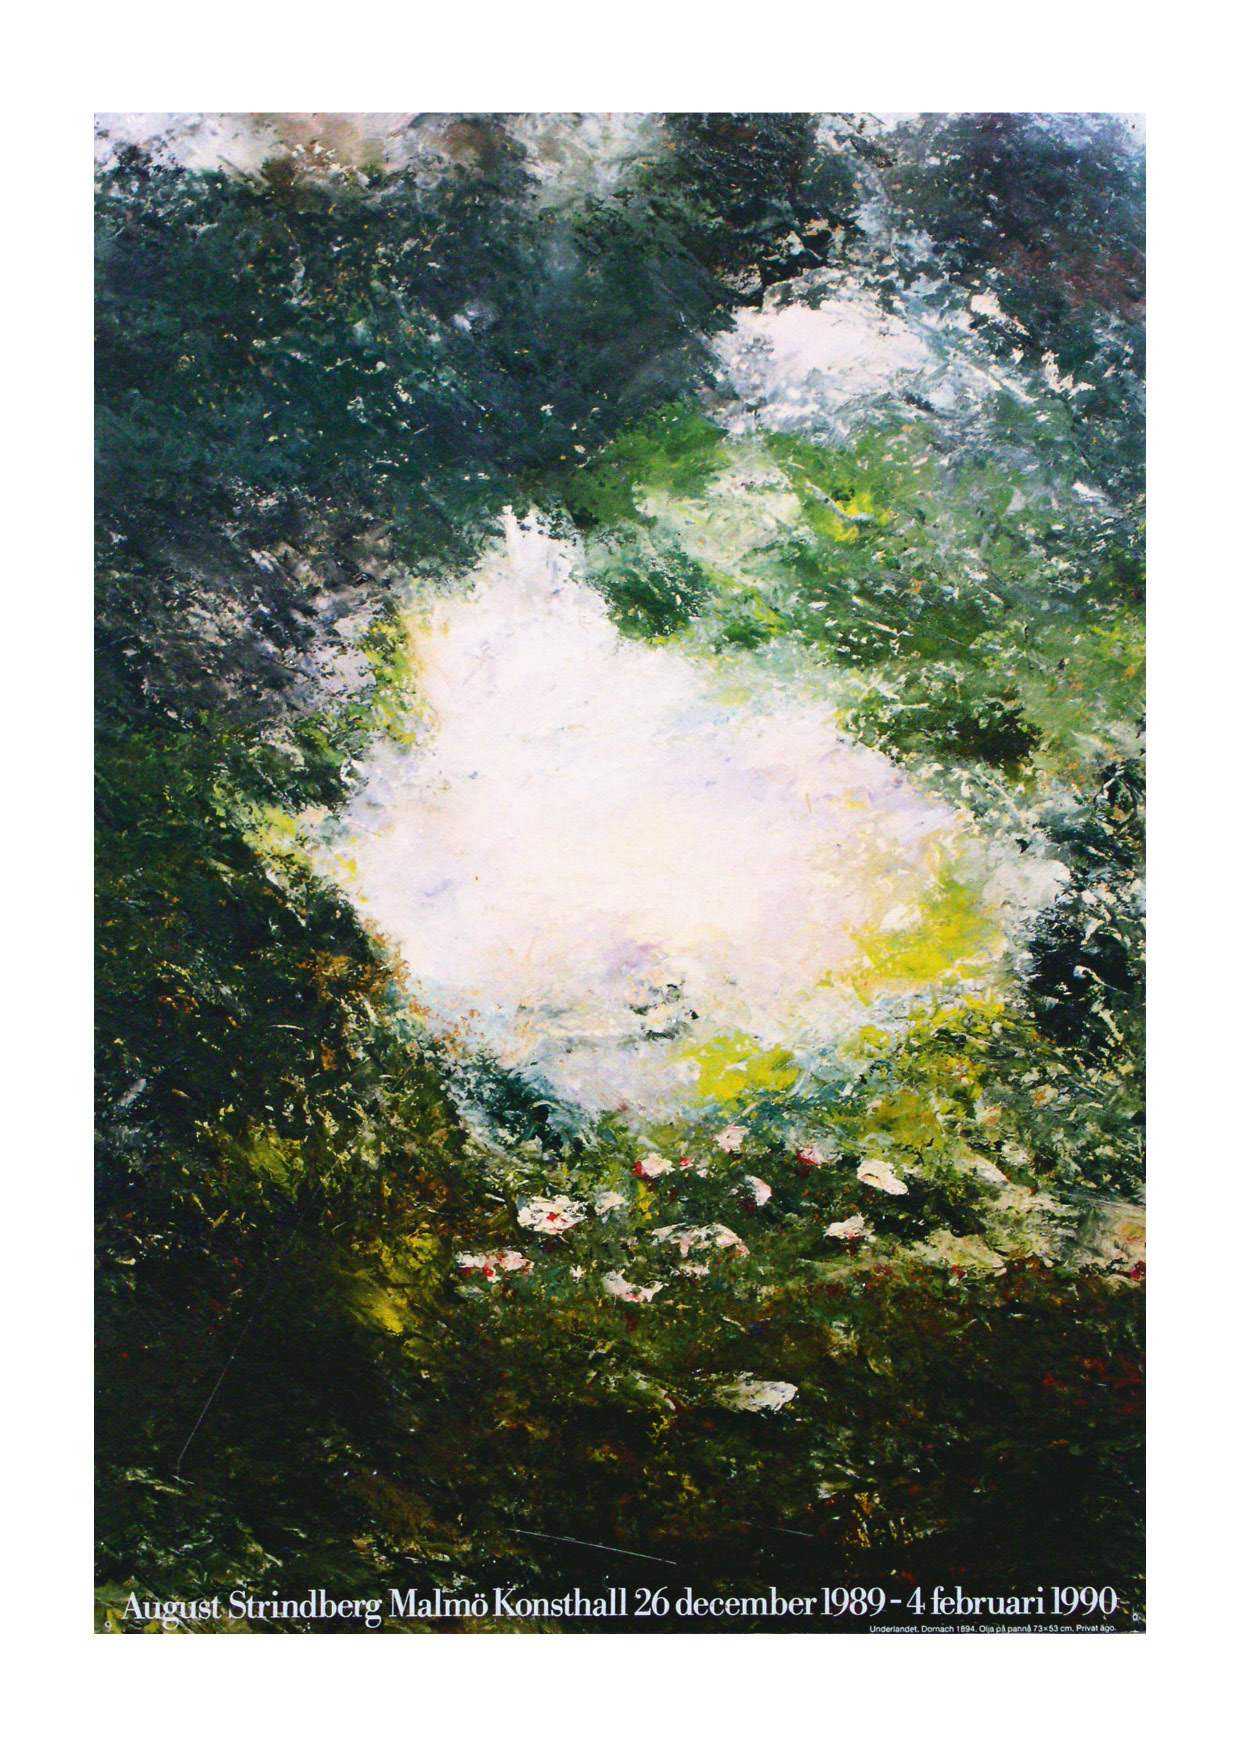 Poster Strindberg, 1989-90. Impressionistisk målning i gröna och vita nyanser.